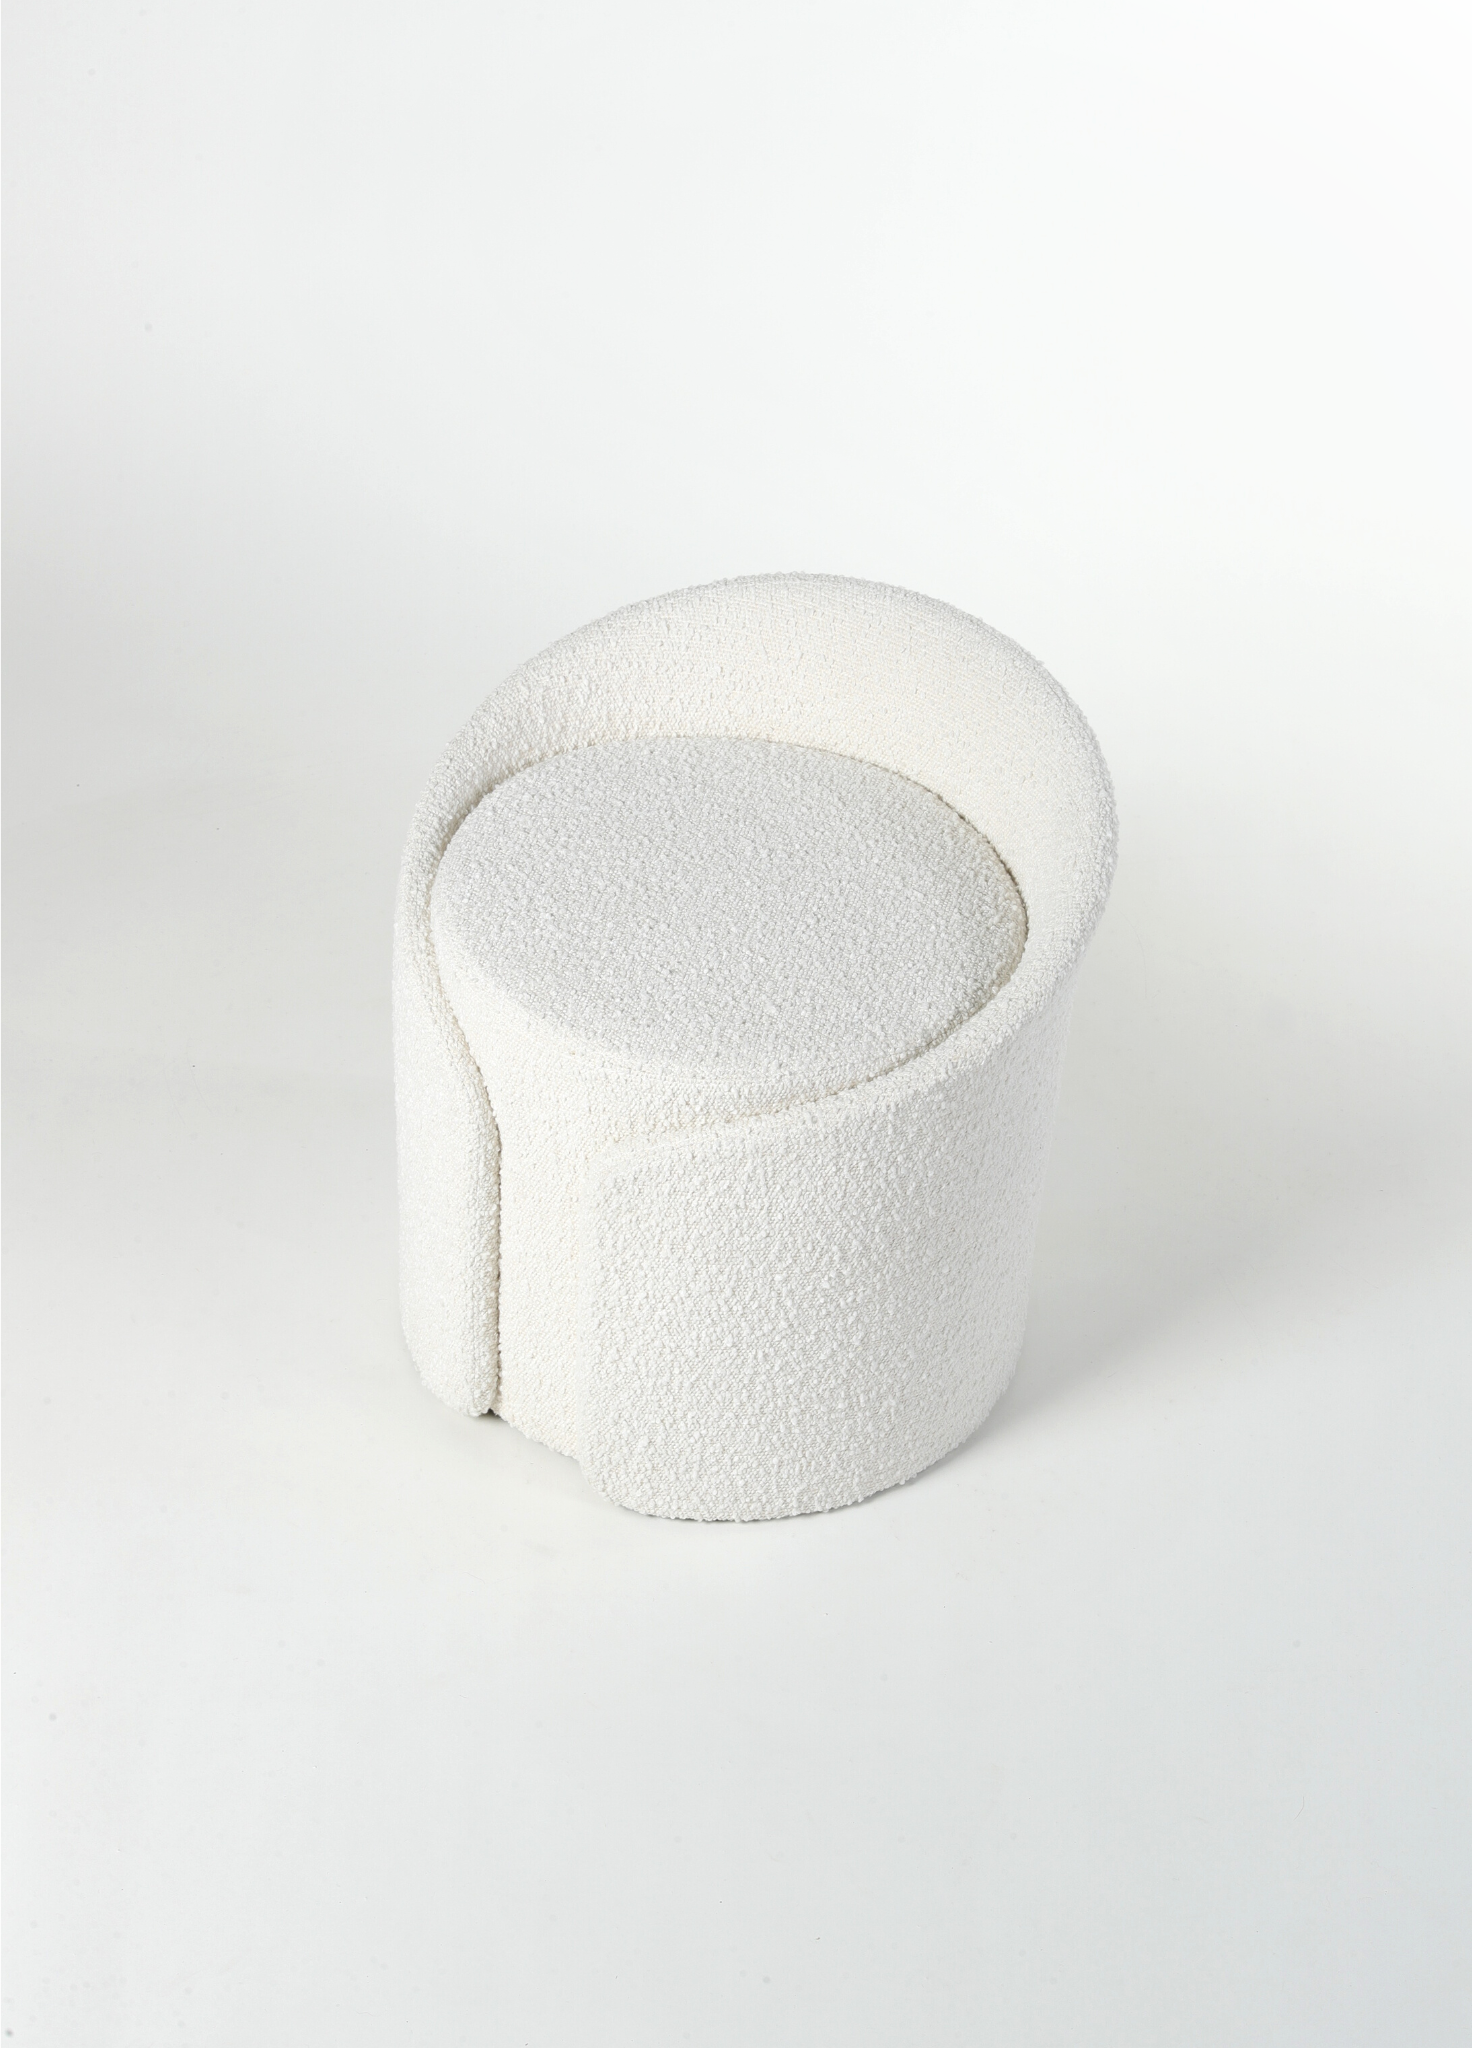 Designer Furniture | Flower Core Stool